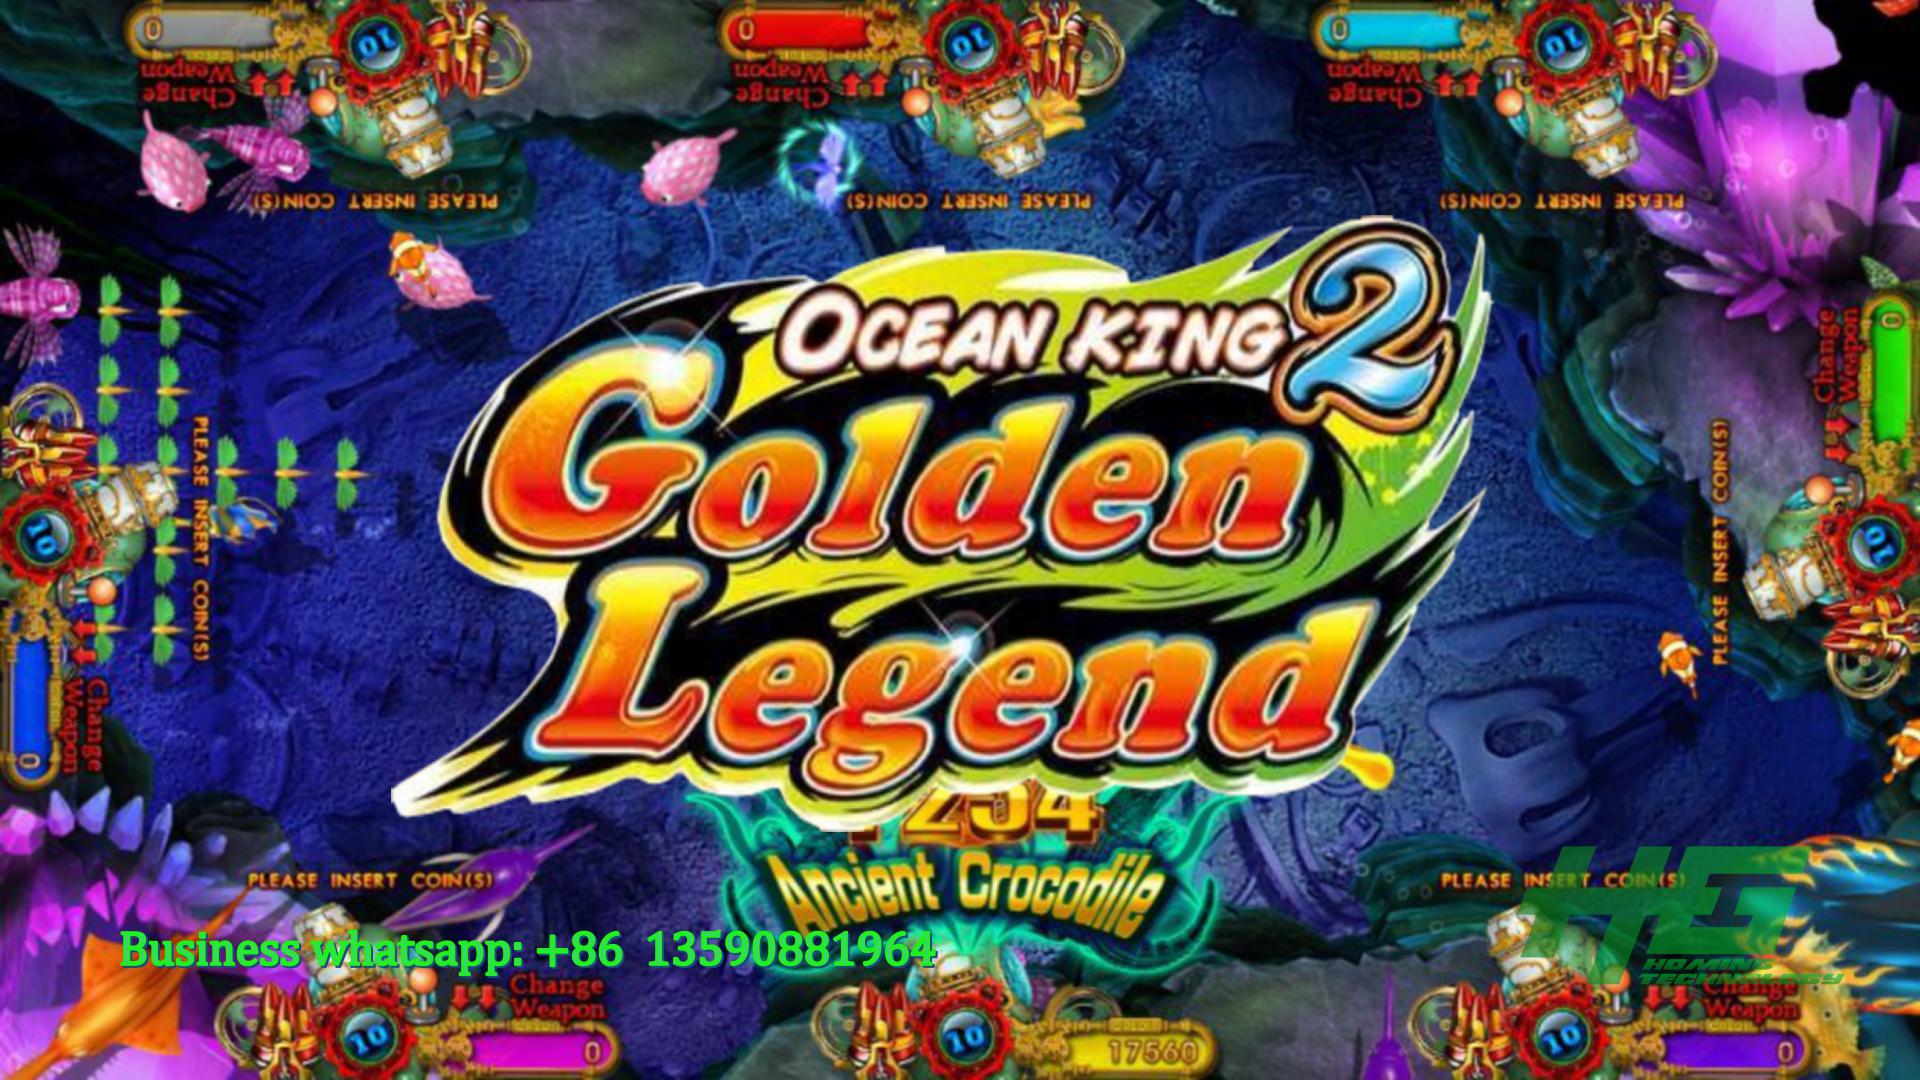 IGS Original Ocean King 2 Golden Legend Fishing Game,Ocean King 2 Fish Hunter Game Machine Demo